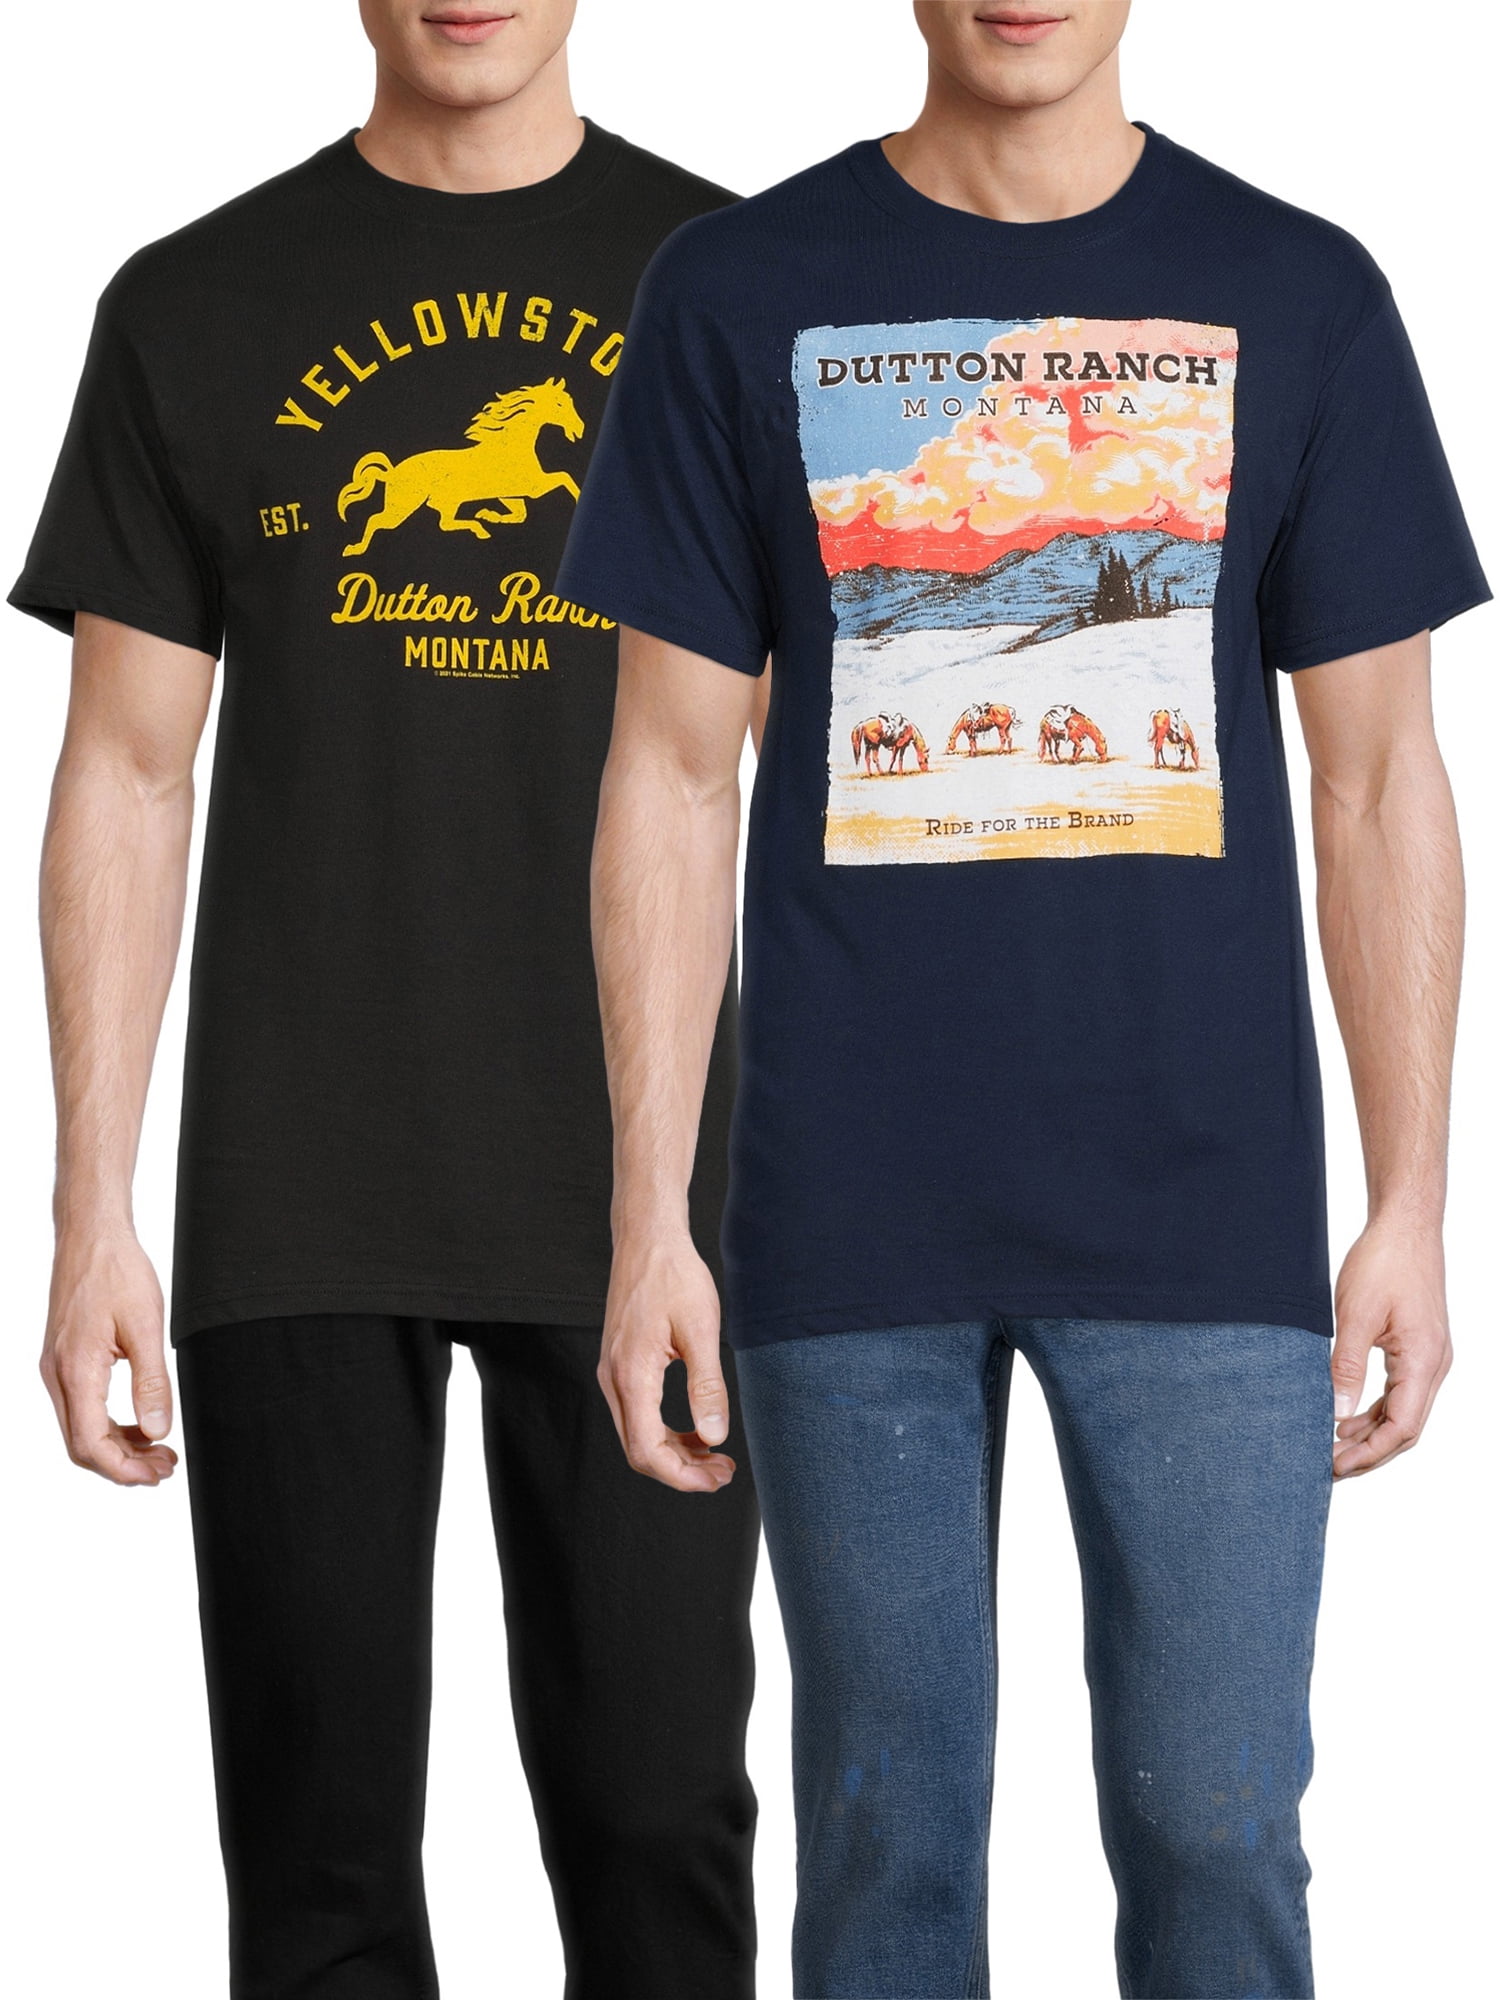 yellowstone apparel